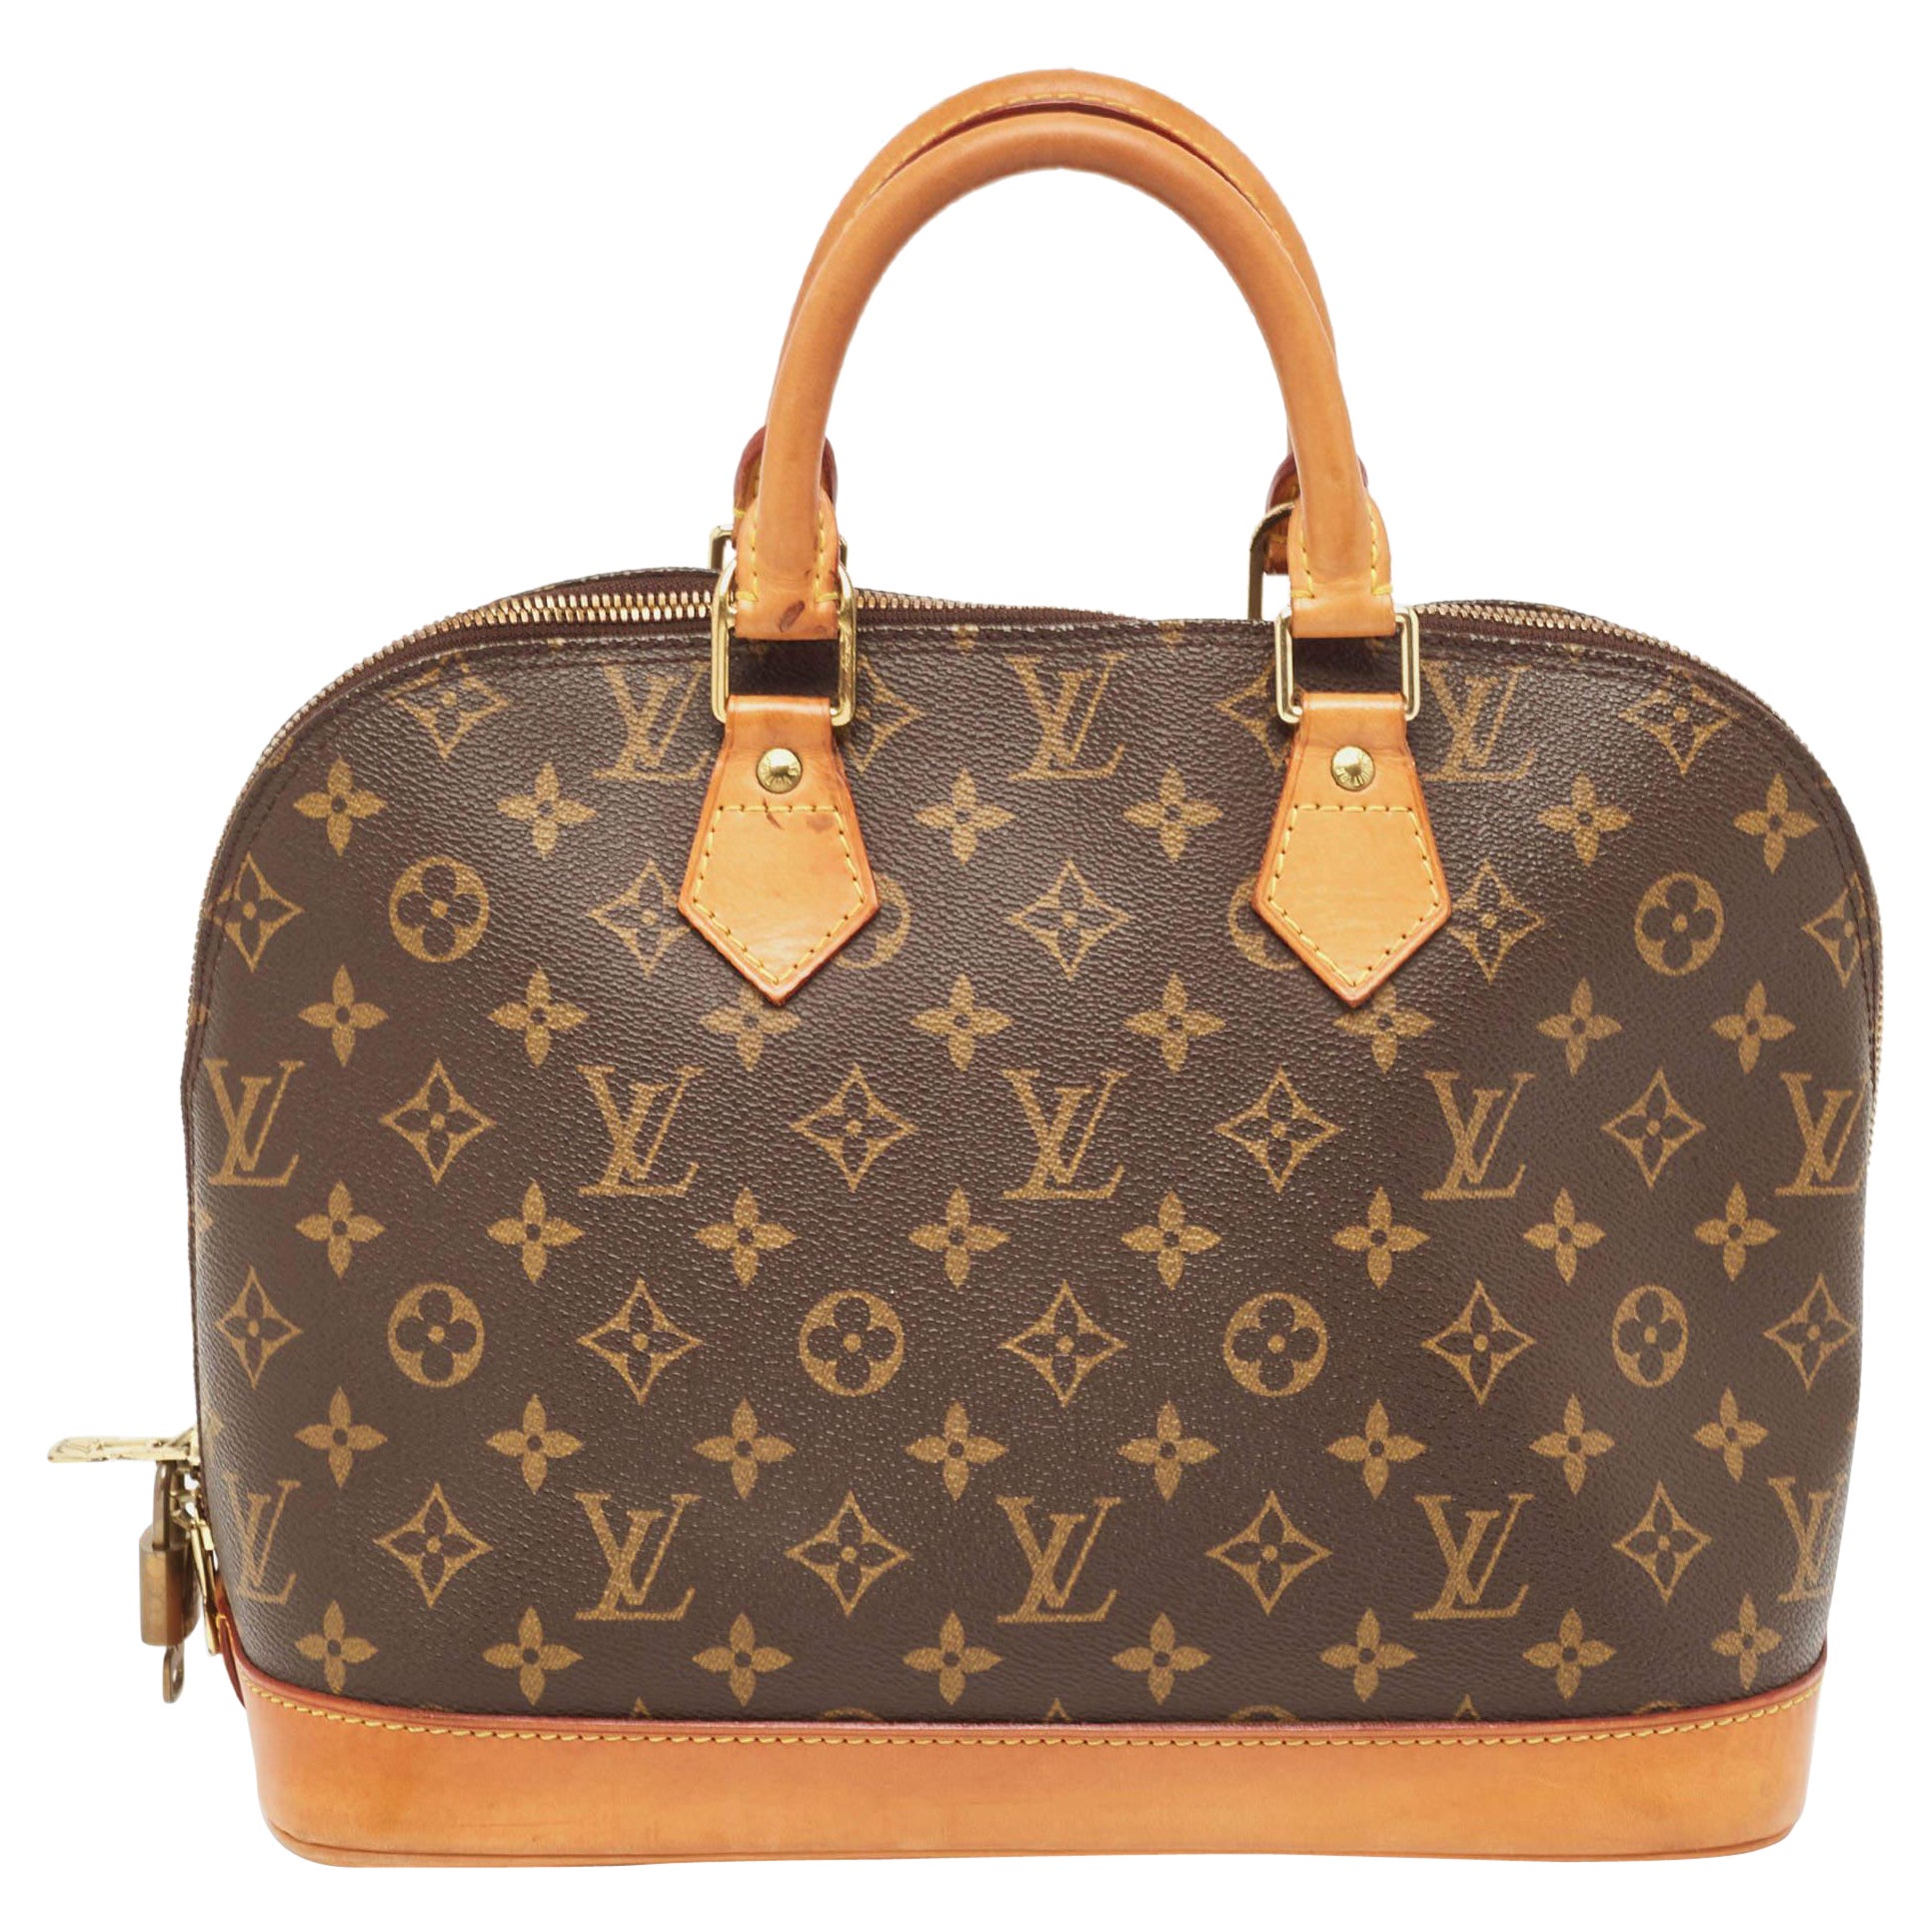 Is the Louis Vuitton Alma a classic bag?